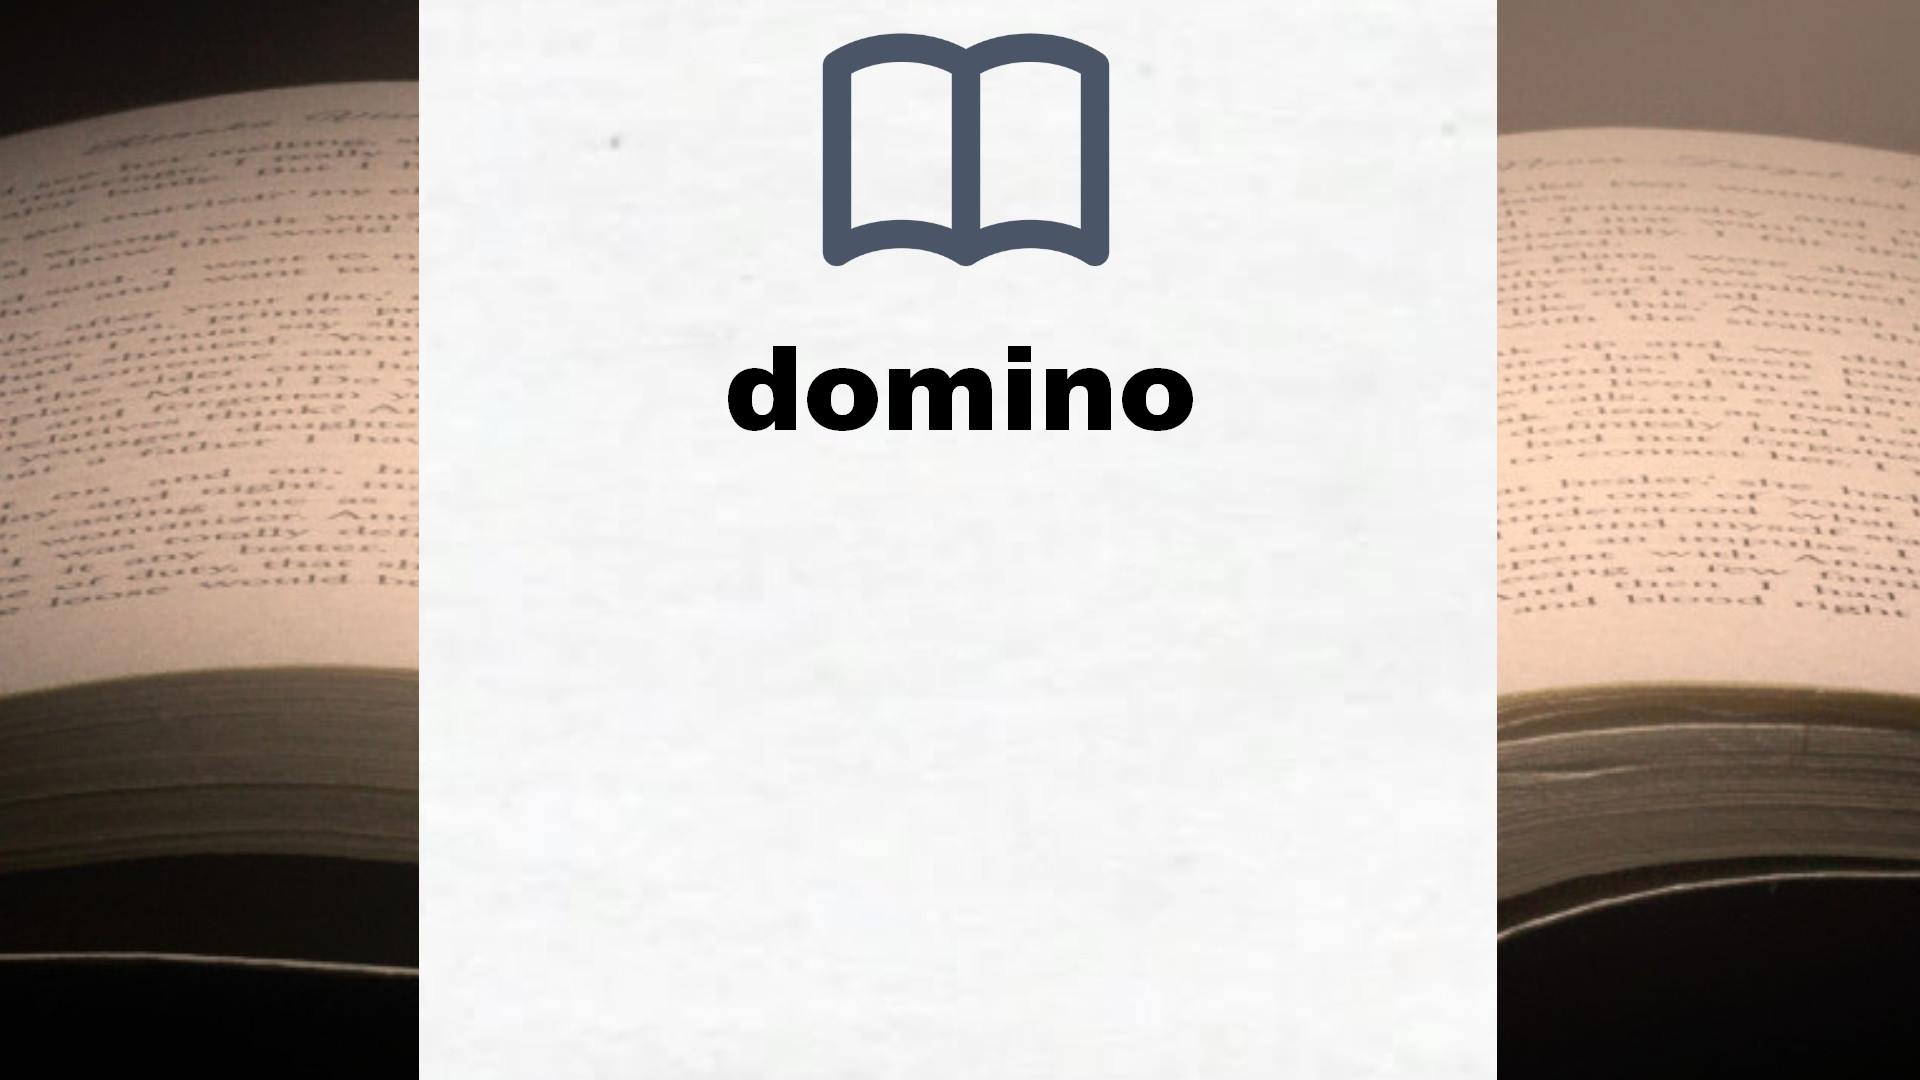 Libros sobre domino